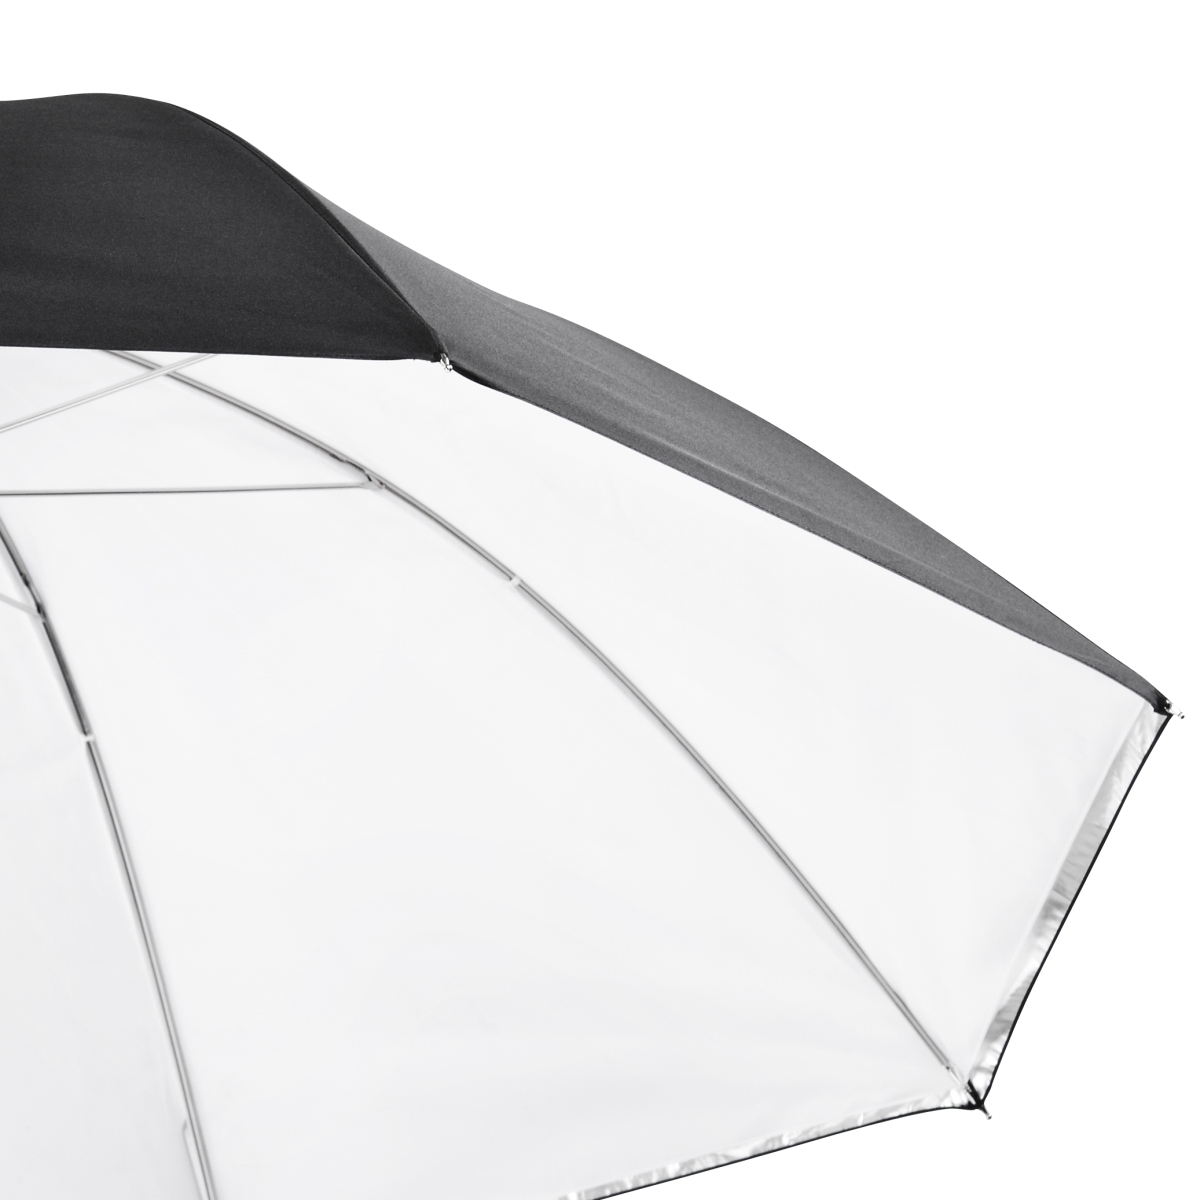 Walimex 2in1 Reflex & Transl. Umbrella white 109cm